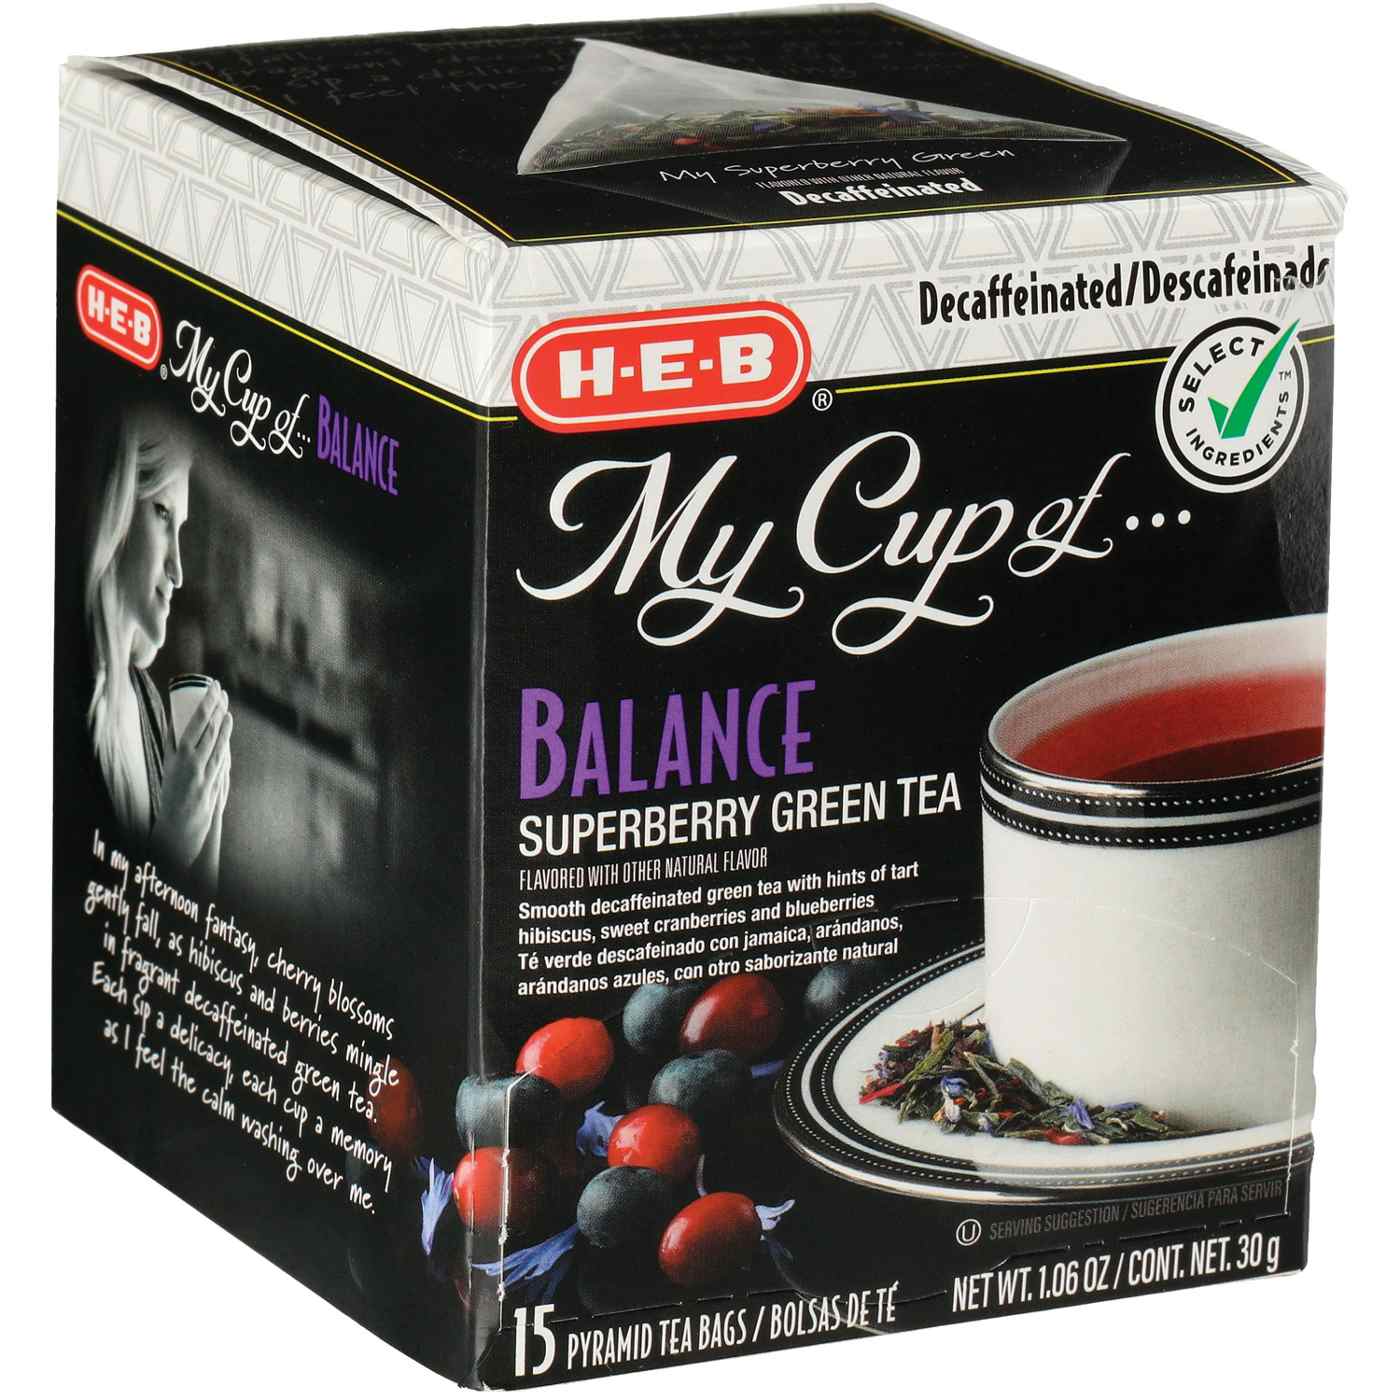 H-E-B My Cup of Balance Decaffeinated Superberry Green Tea, Pyramid Tea Bags; image 2 of 2